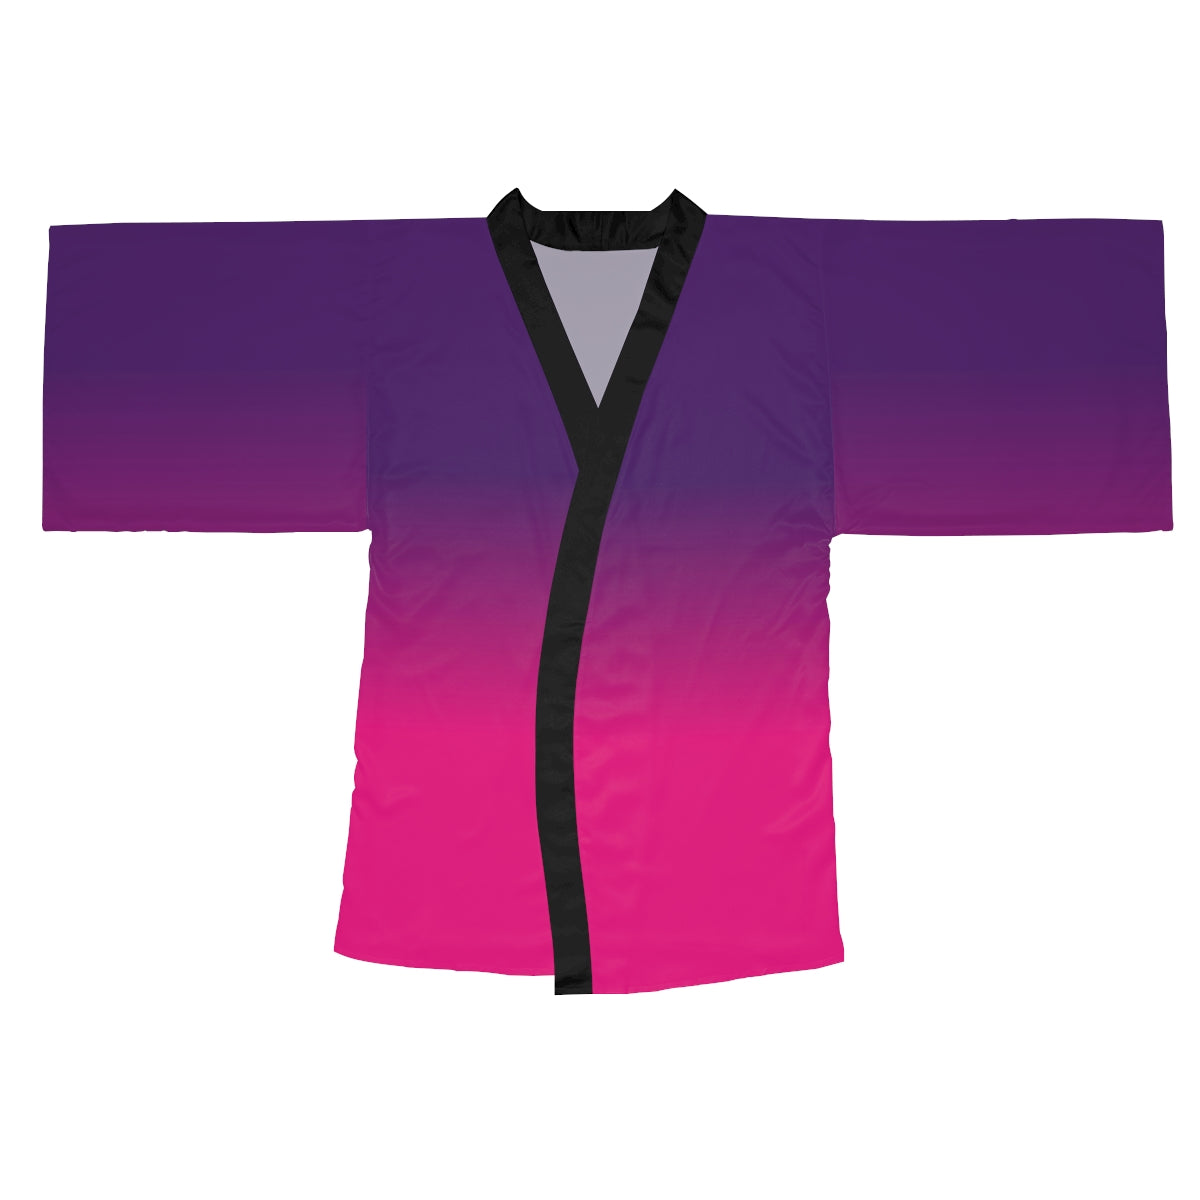 Pink Purple Kimono Robe Long Sleeves, Ombre Tie Dye Gradient Print Peignoir Japanese Women's Short Sexy Lounge Sleepwear Pajama Bathrobe Starcove Fashion